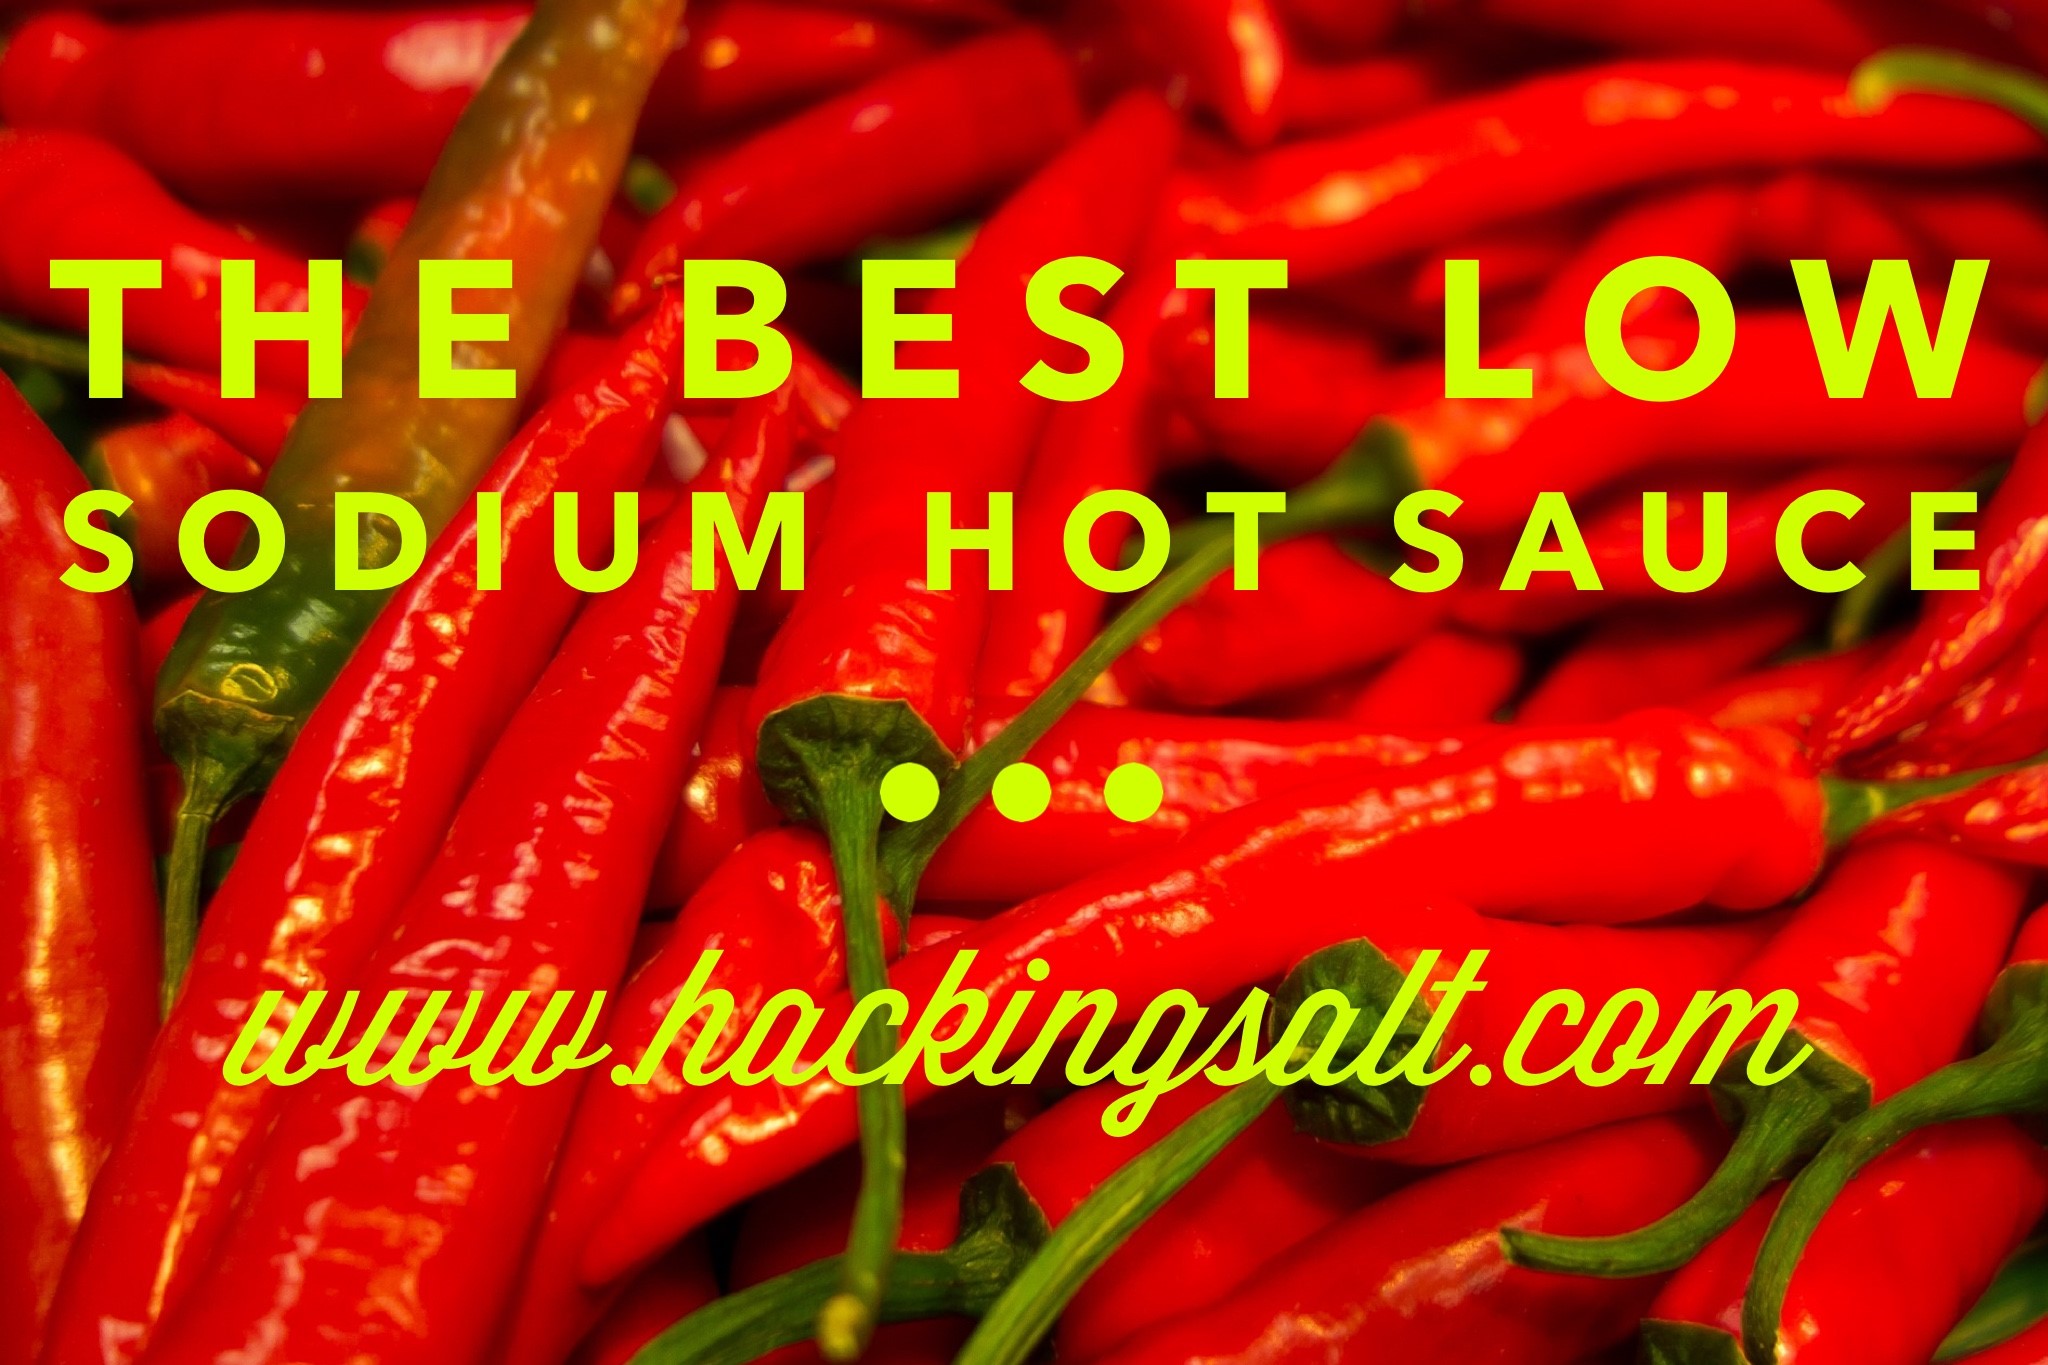 Cajun Heat, Louisiana Hot Sauce, Low Sodium with No MSG, 5oz